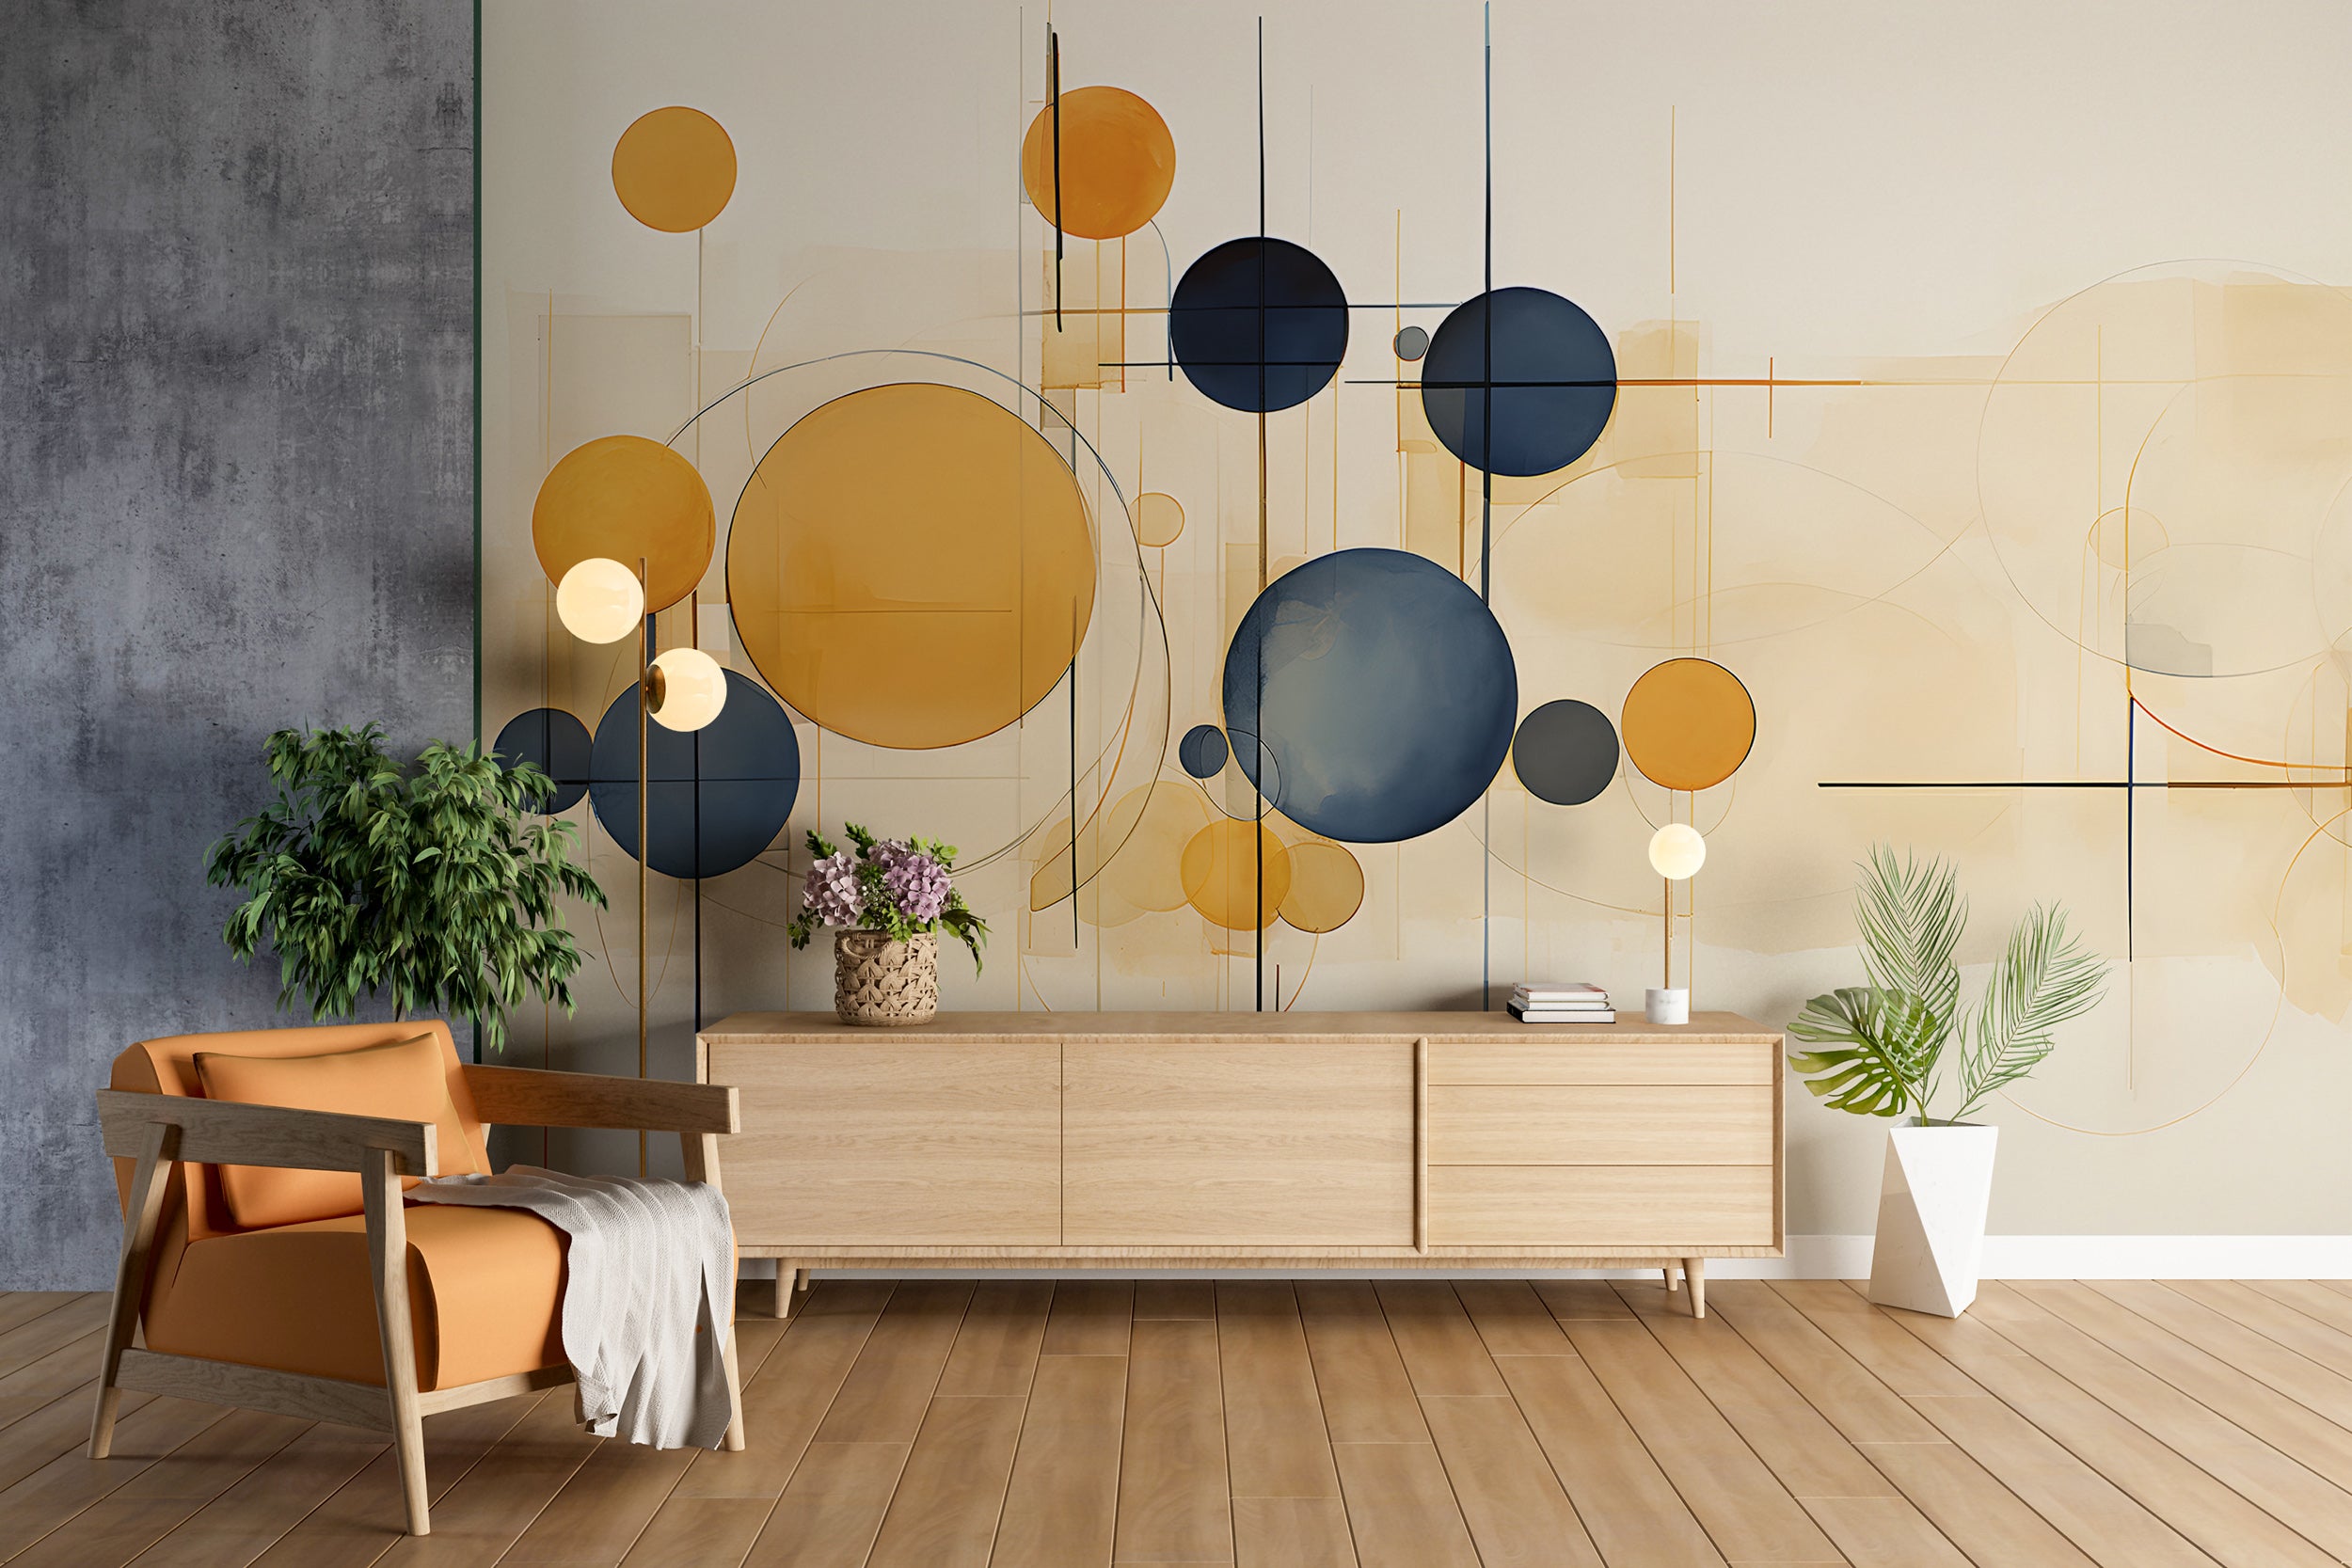 Vibrant Orange and Blue Circles Wallpaper